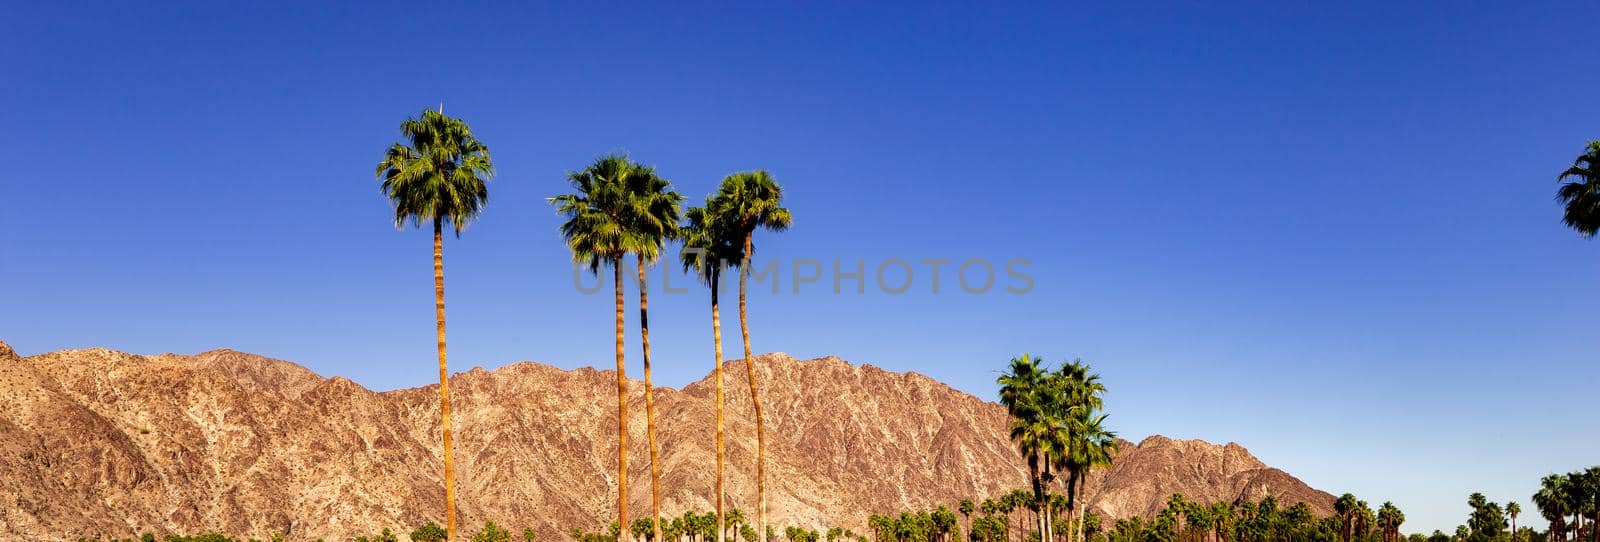 san jacinto mountain, palm springs, california by photogolfer